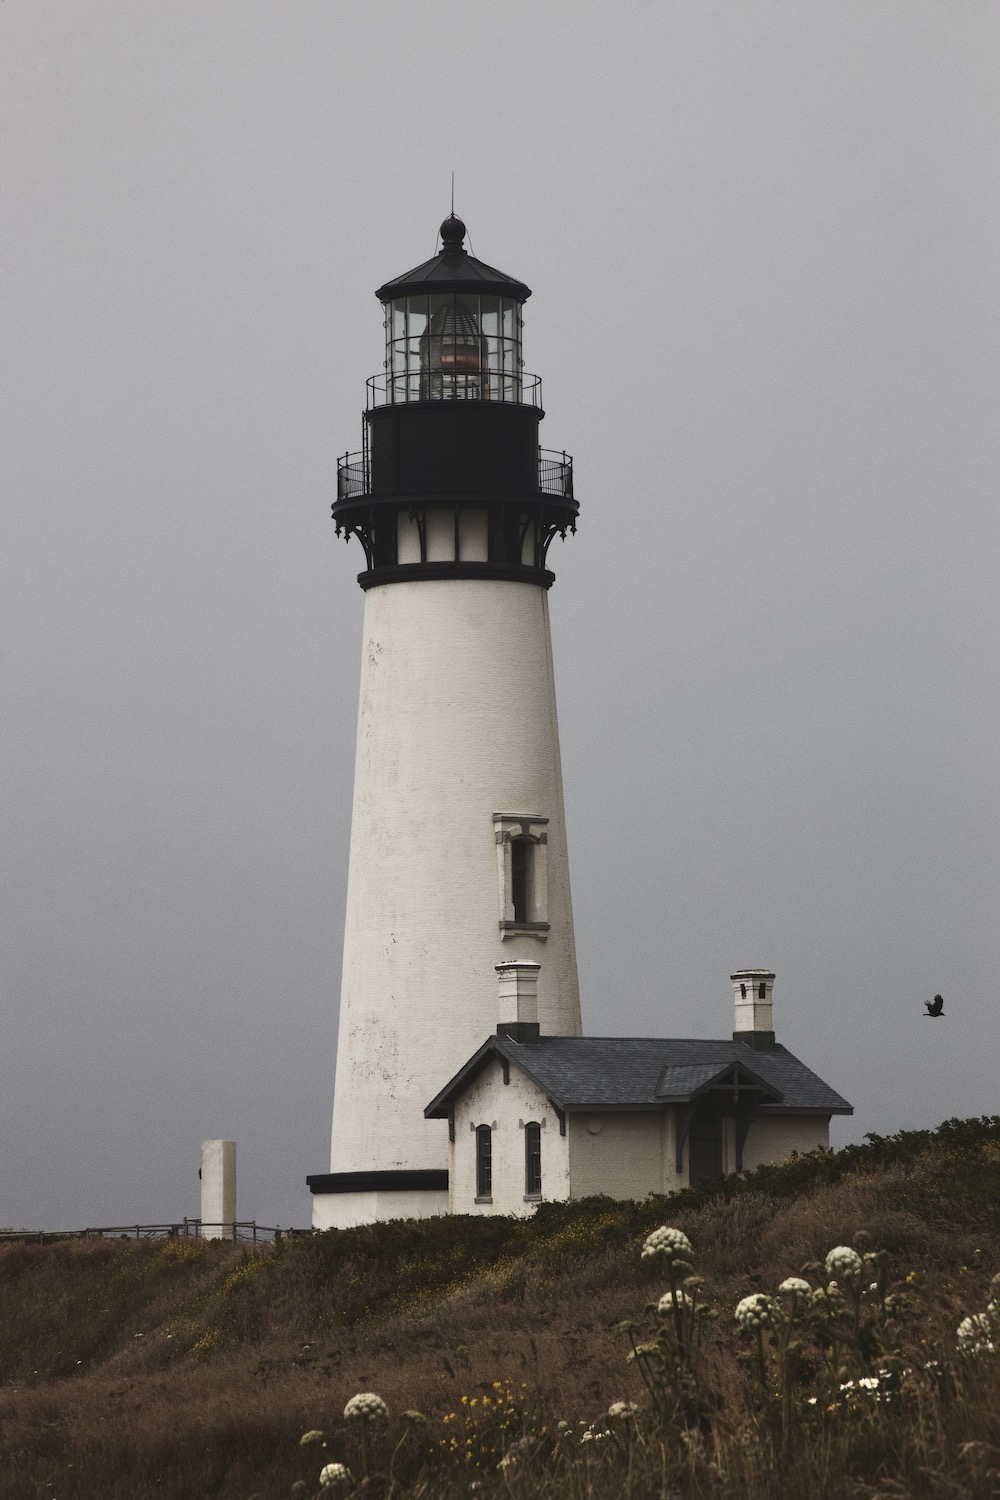 Moesko Island Lighthouse